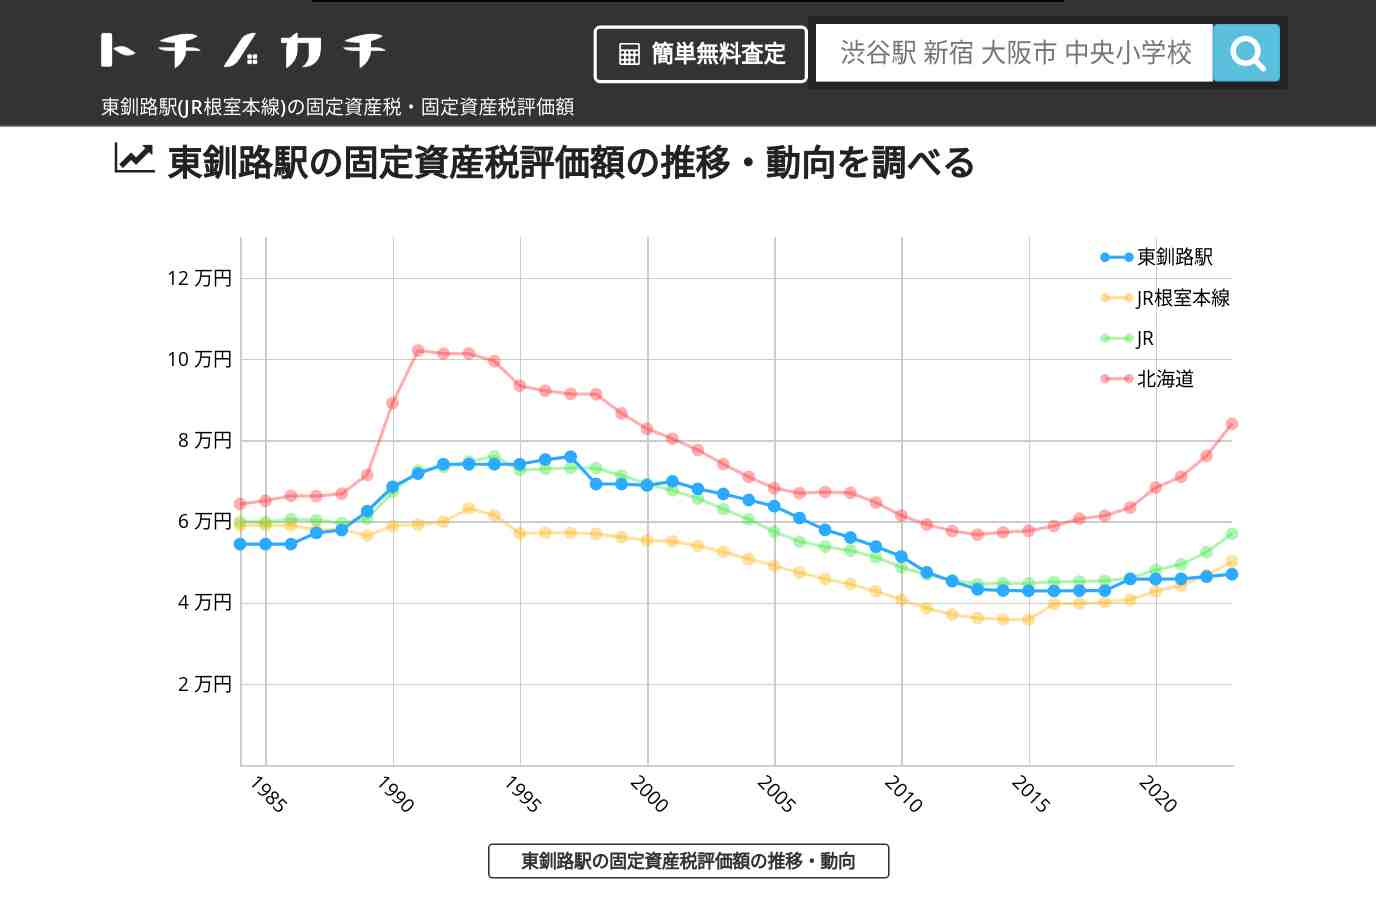 東釧路駅(JR根室本線)の固定資産税・固定資産税評価額 | トチノカチ